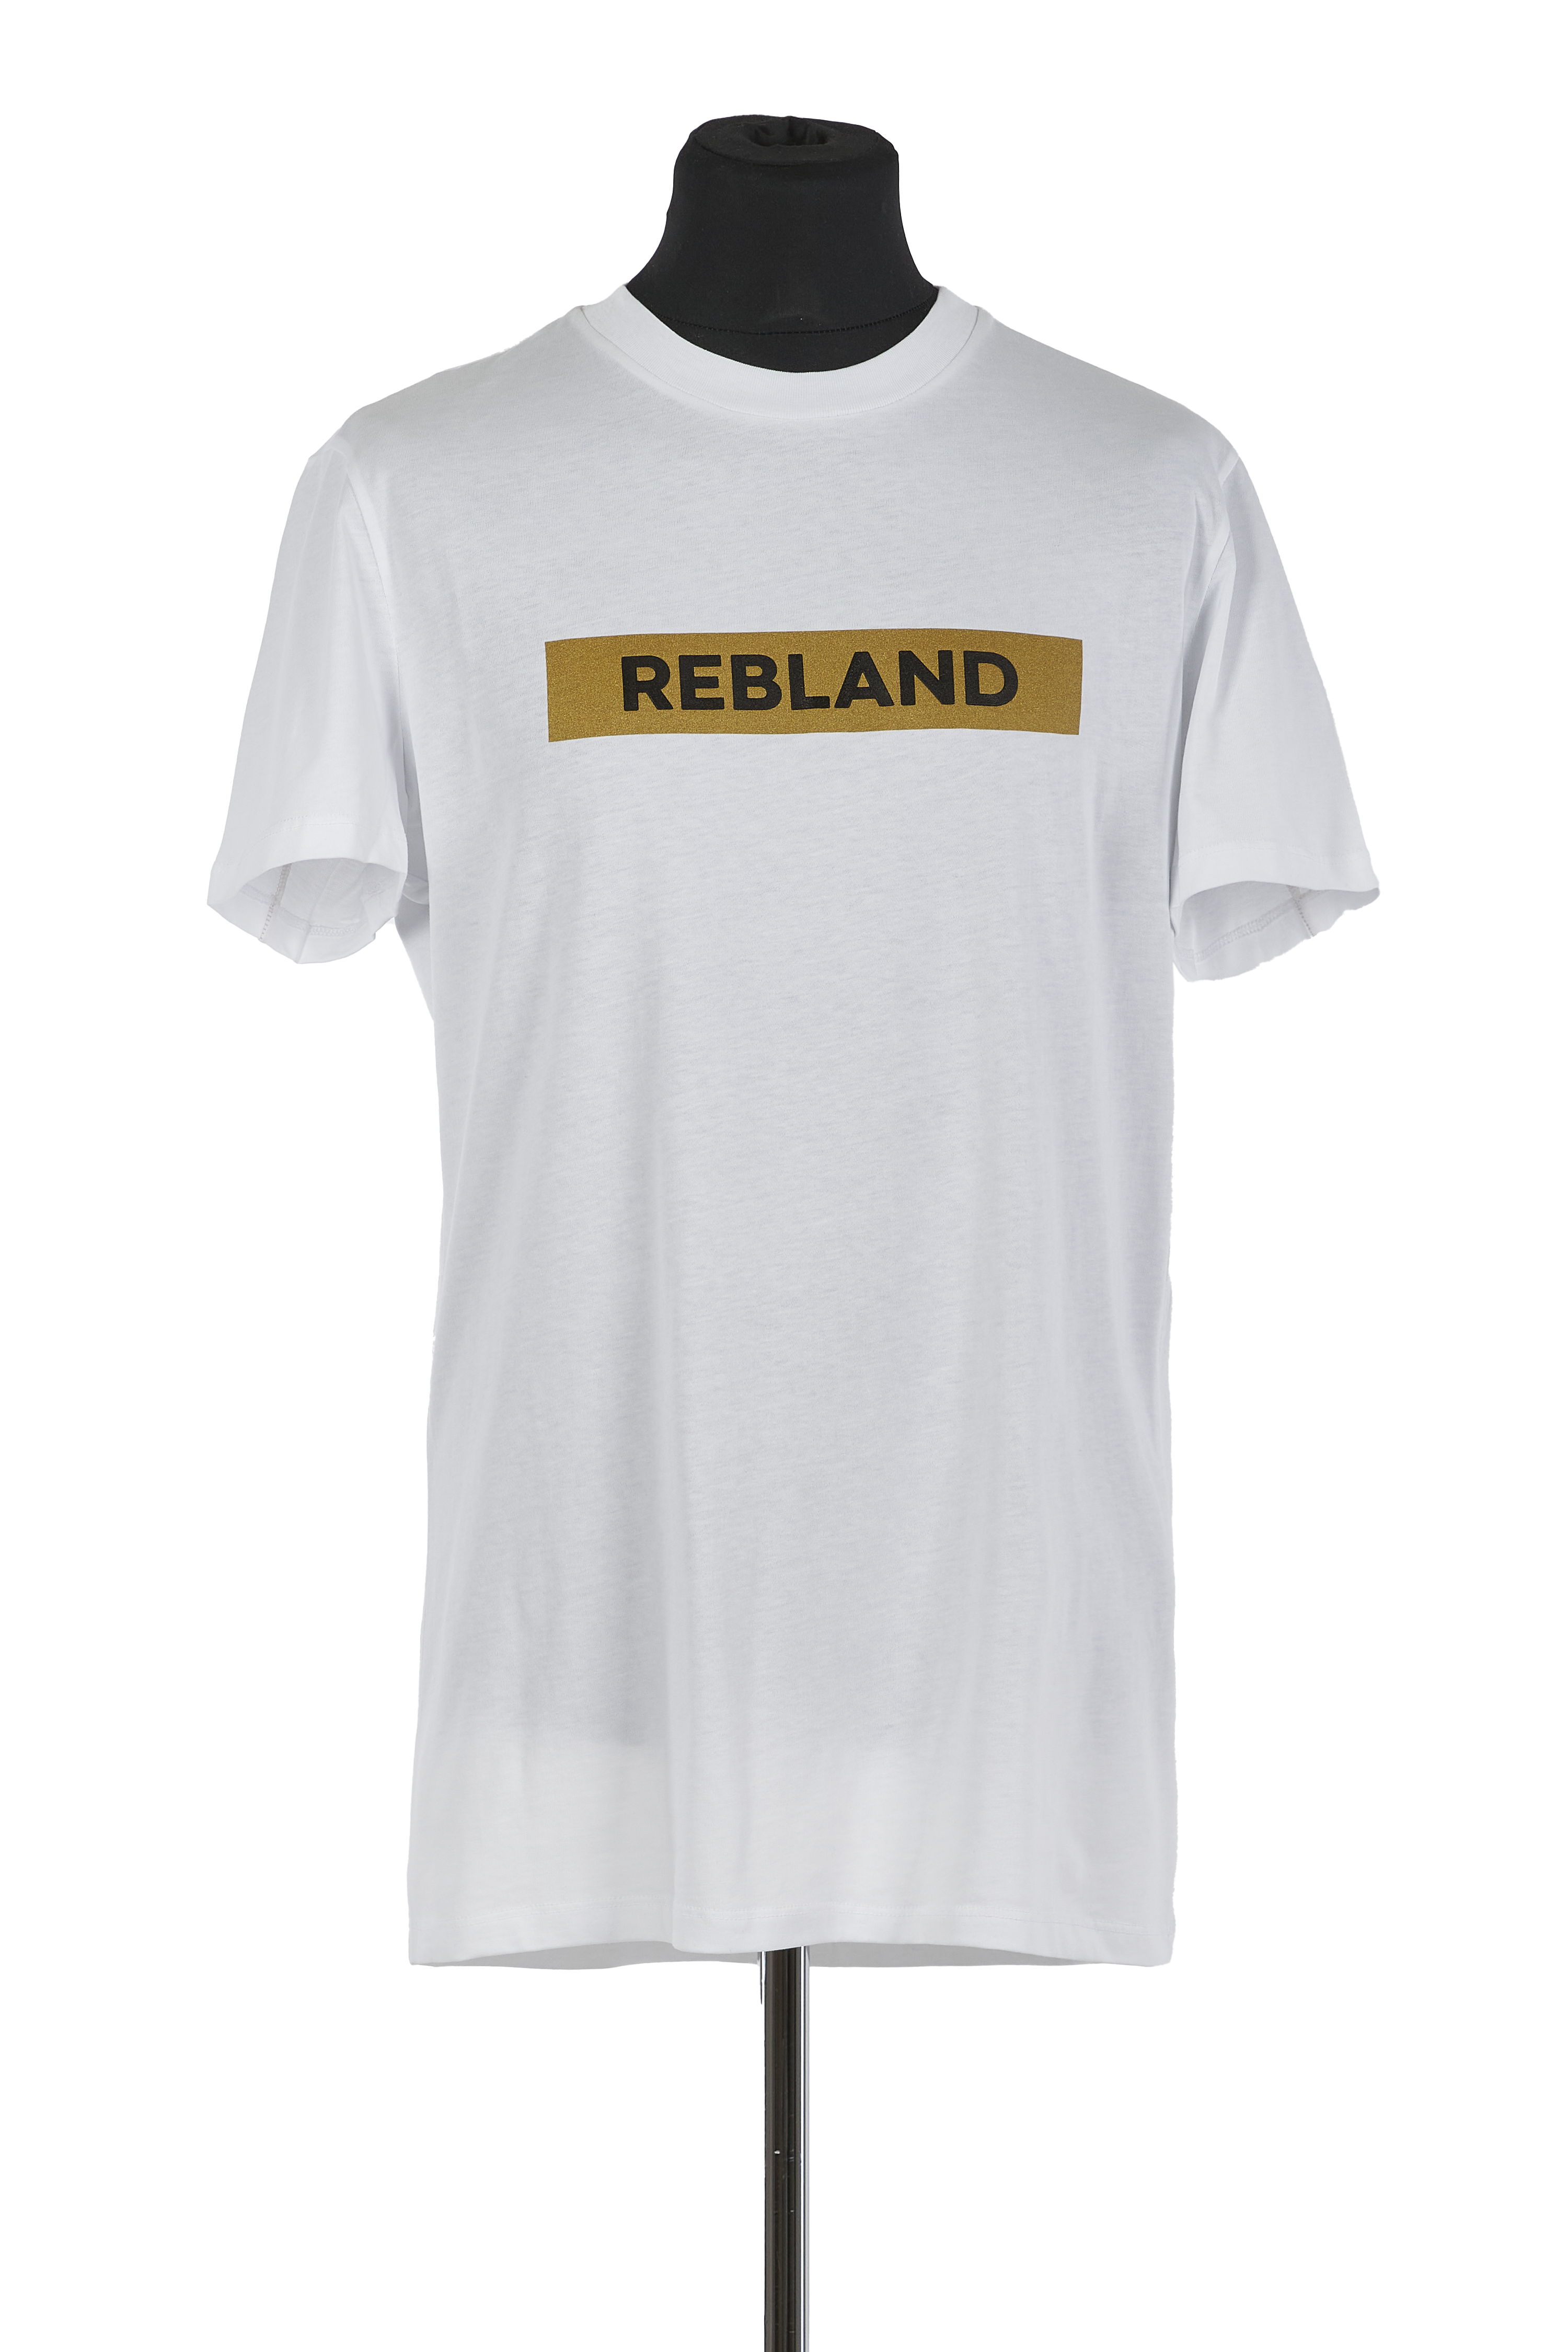 REBLAND T-SHIRT